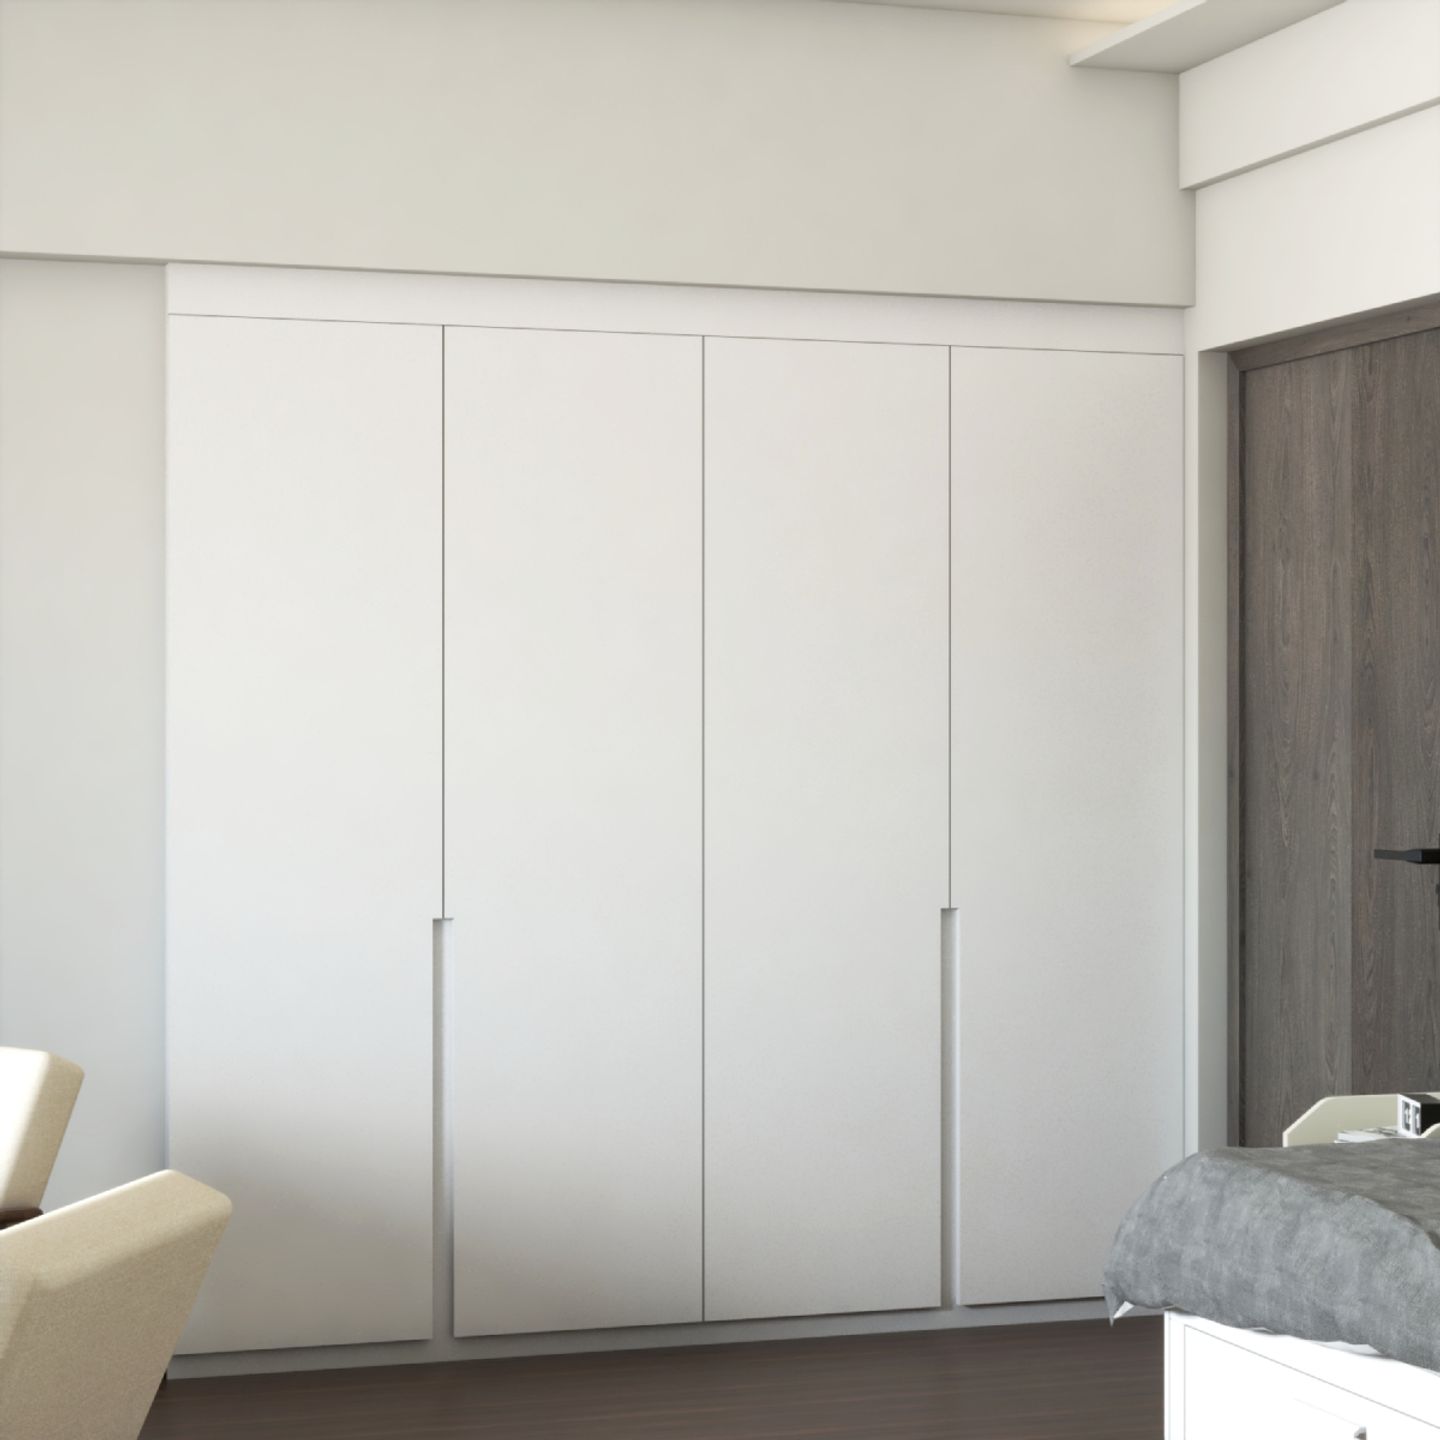 Frosty White 4-Door Swing Wardrobe Design - Livspace